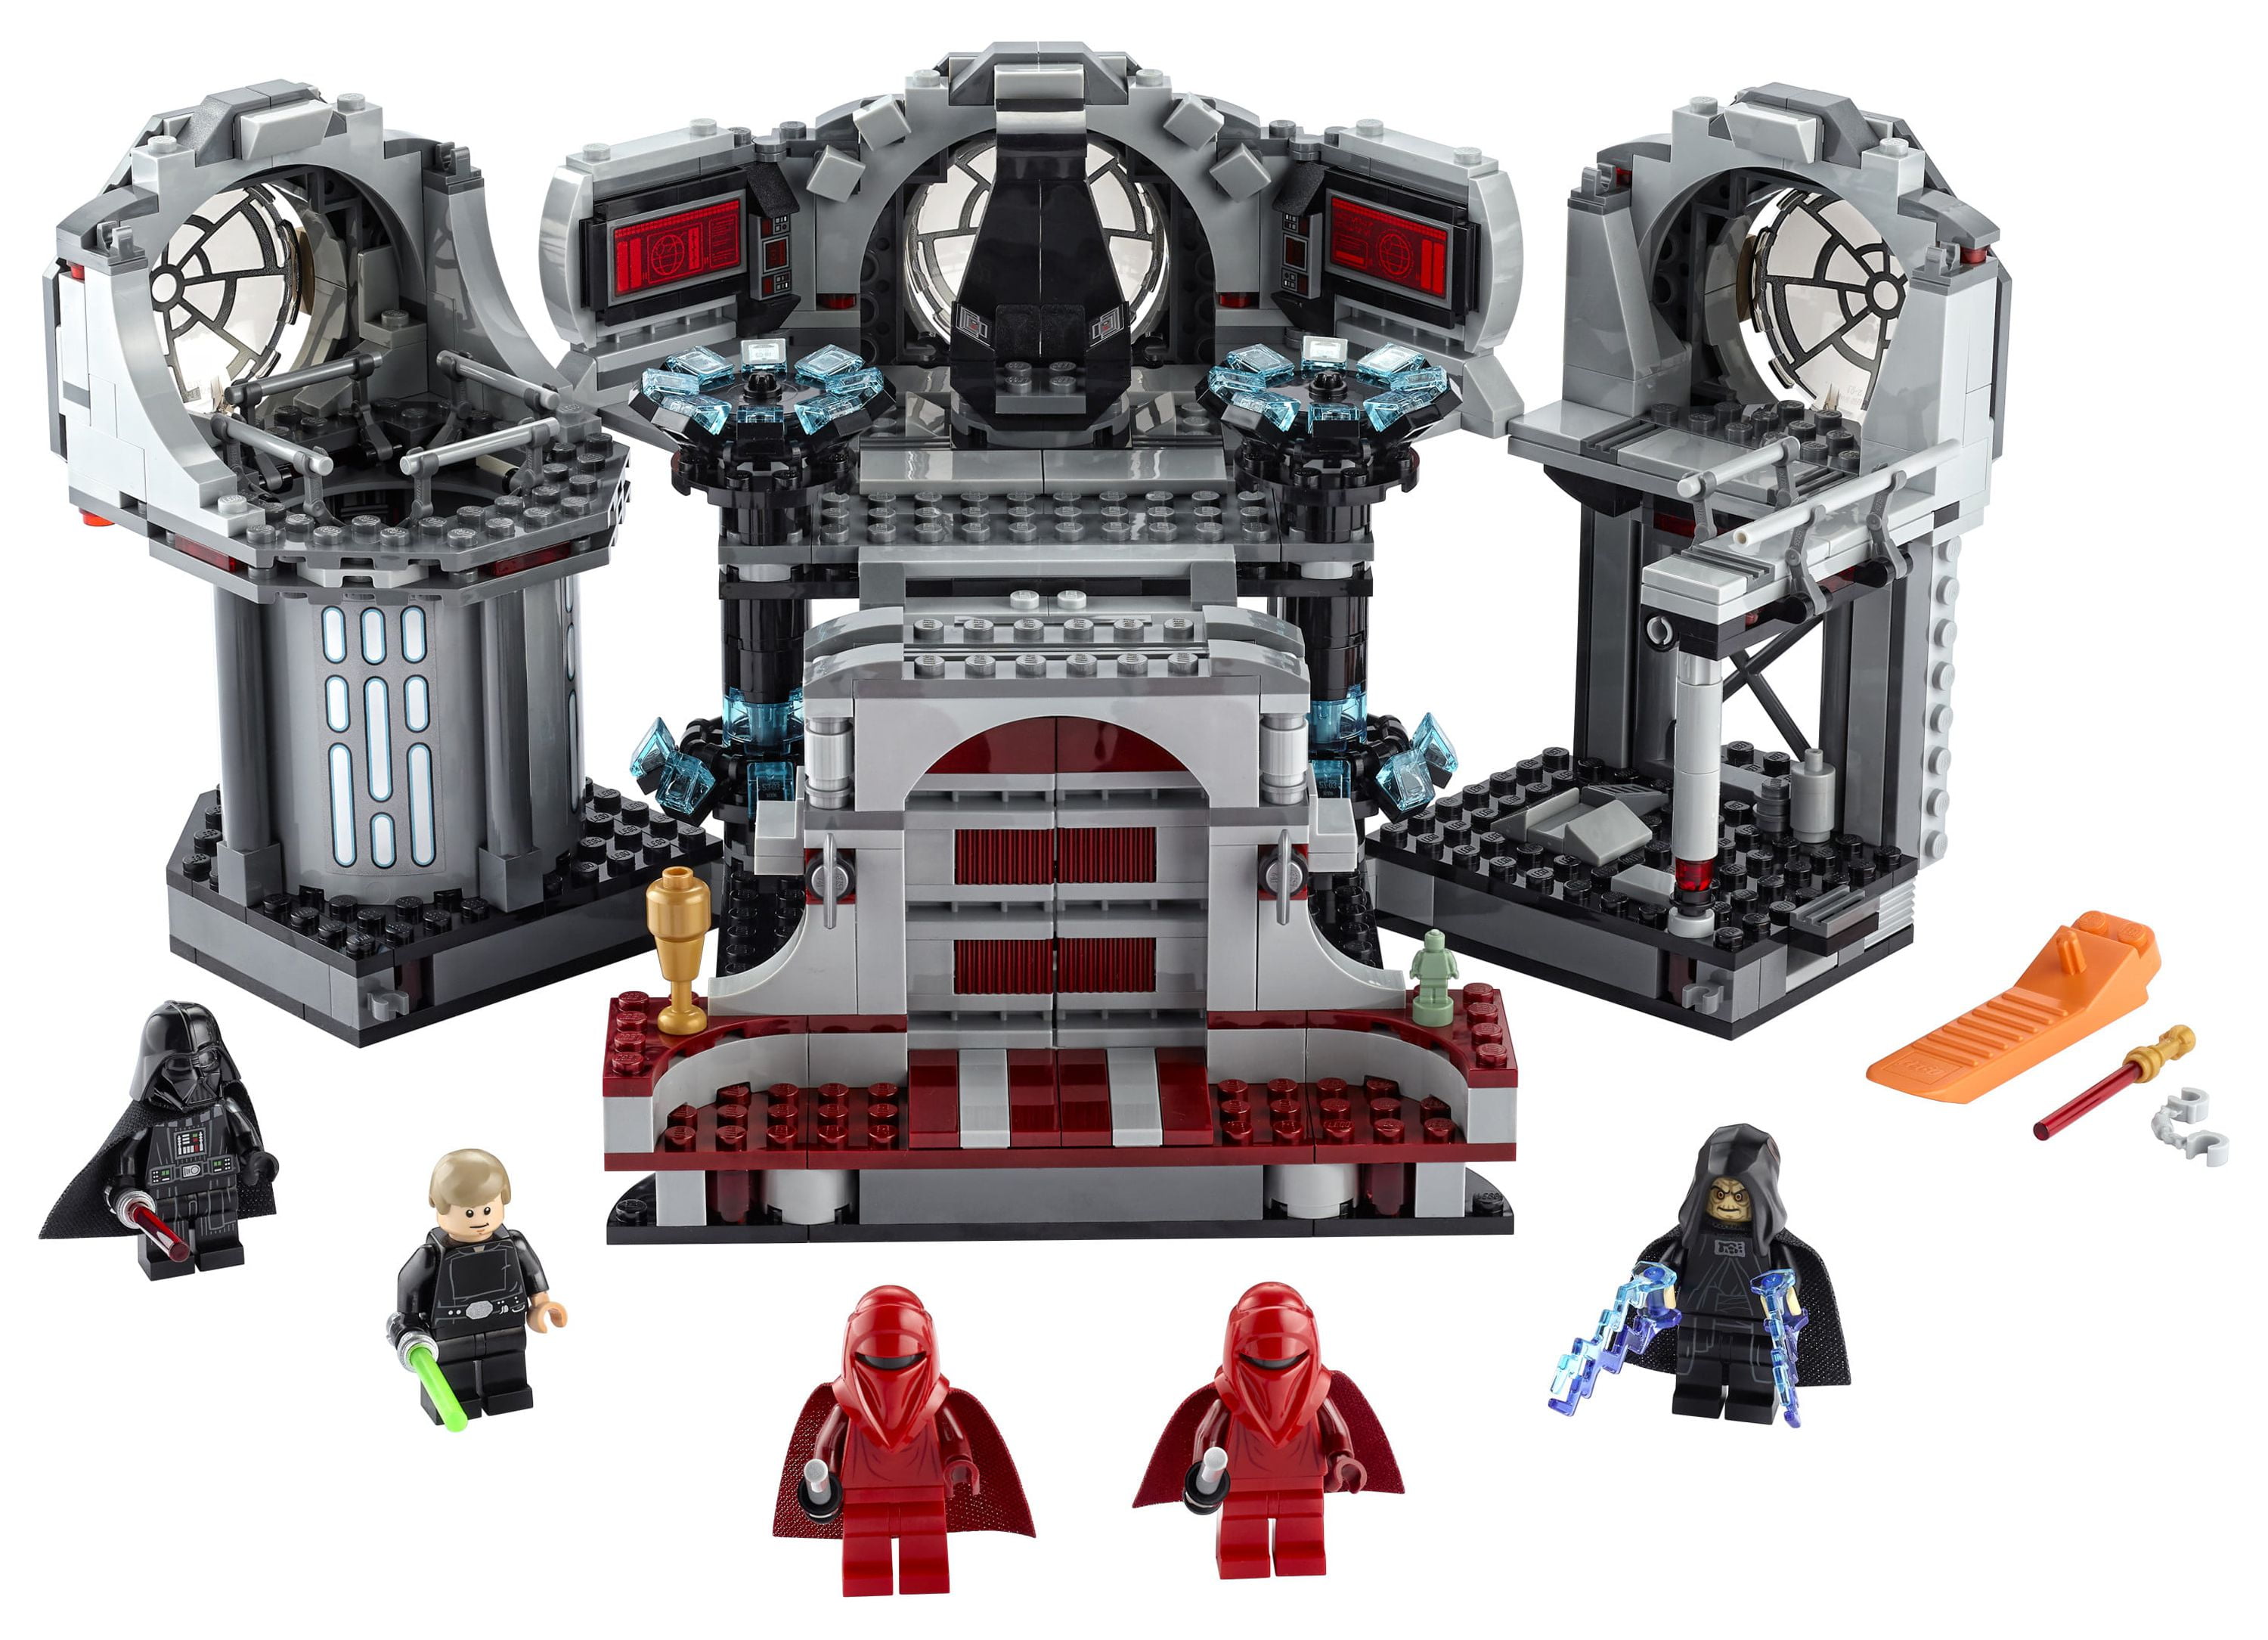 LEGO Star Wars: The Last Jedi Sets